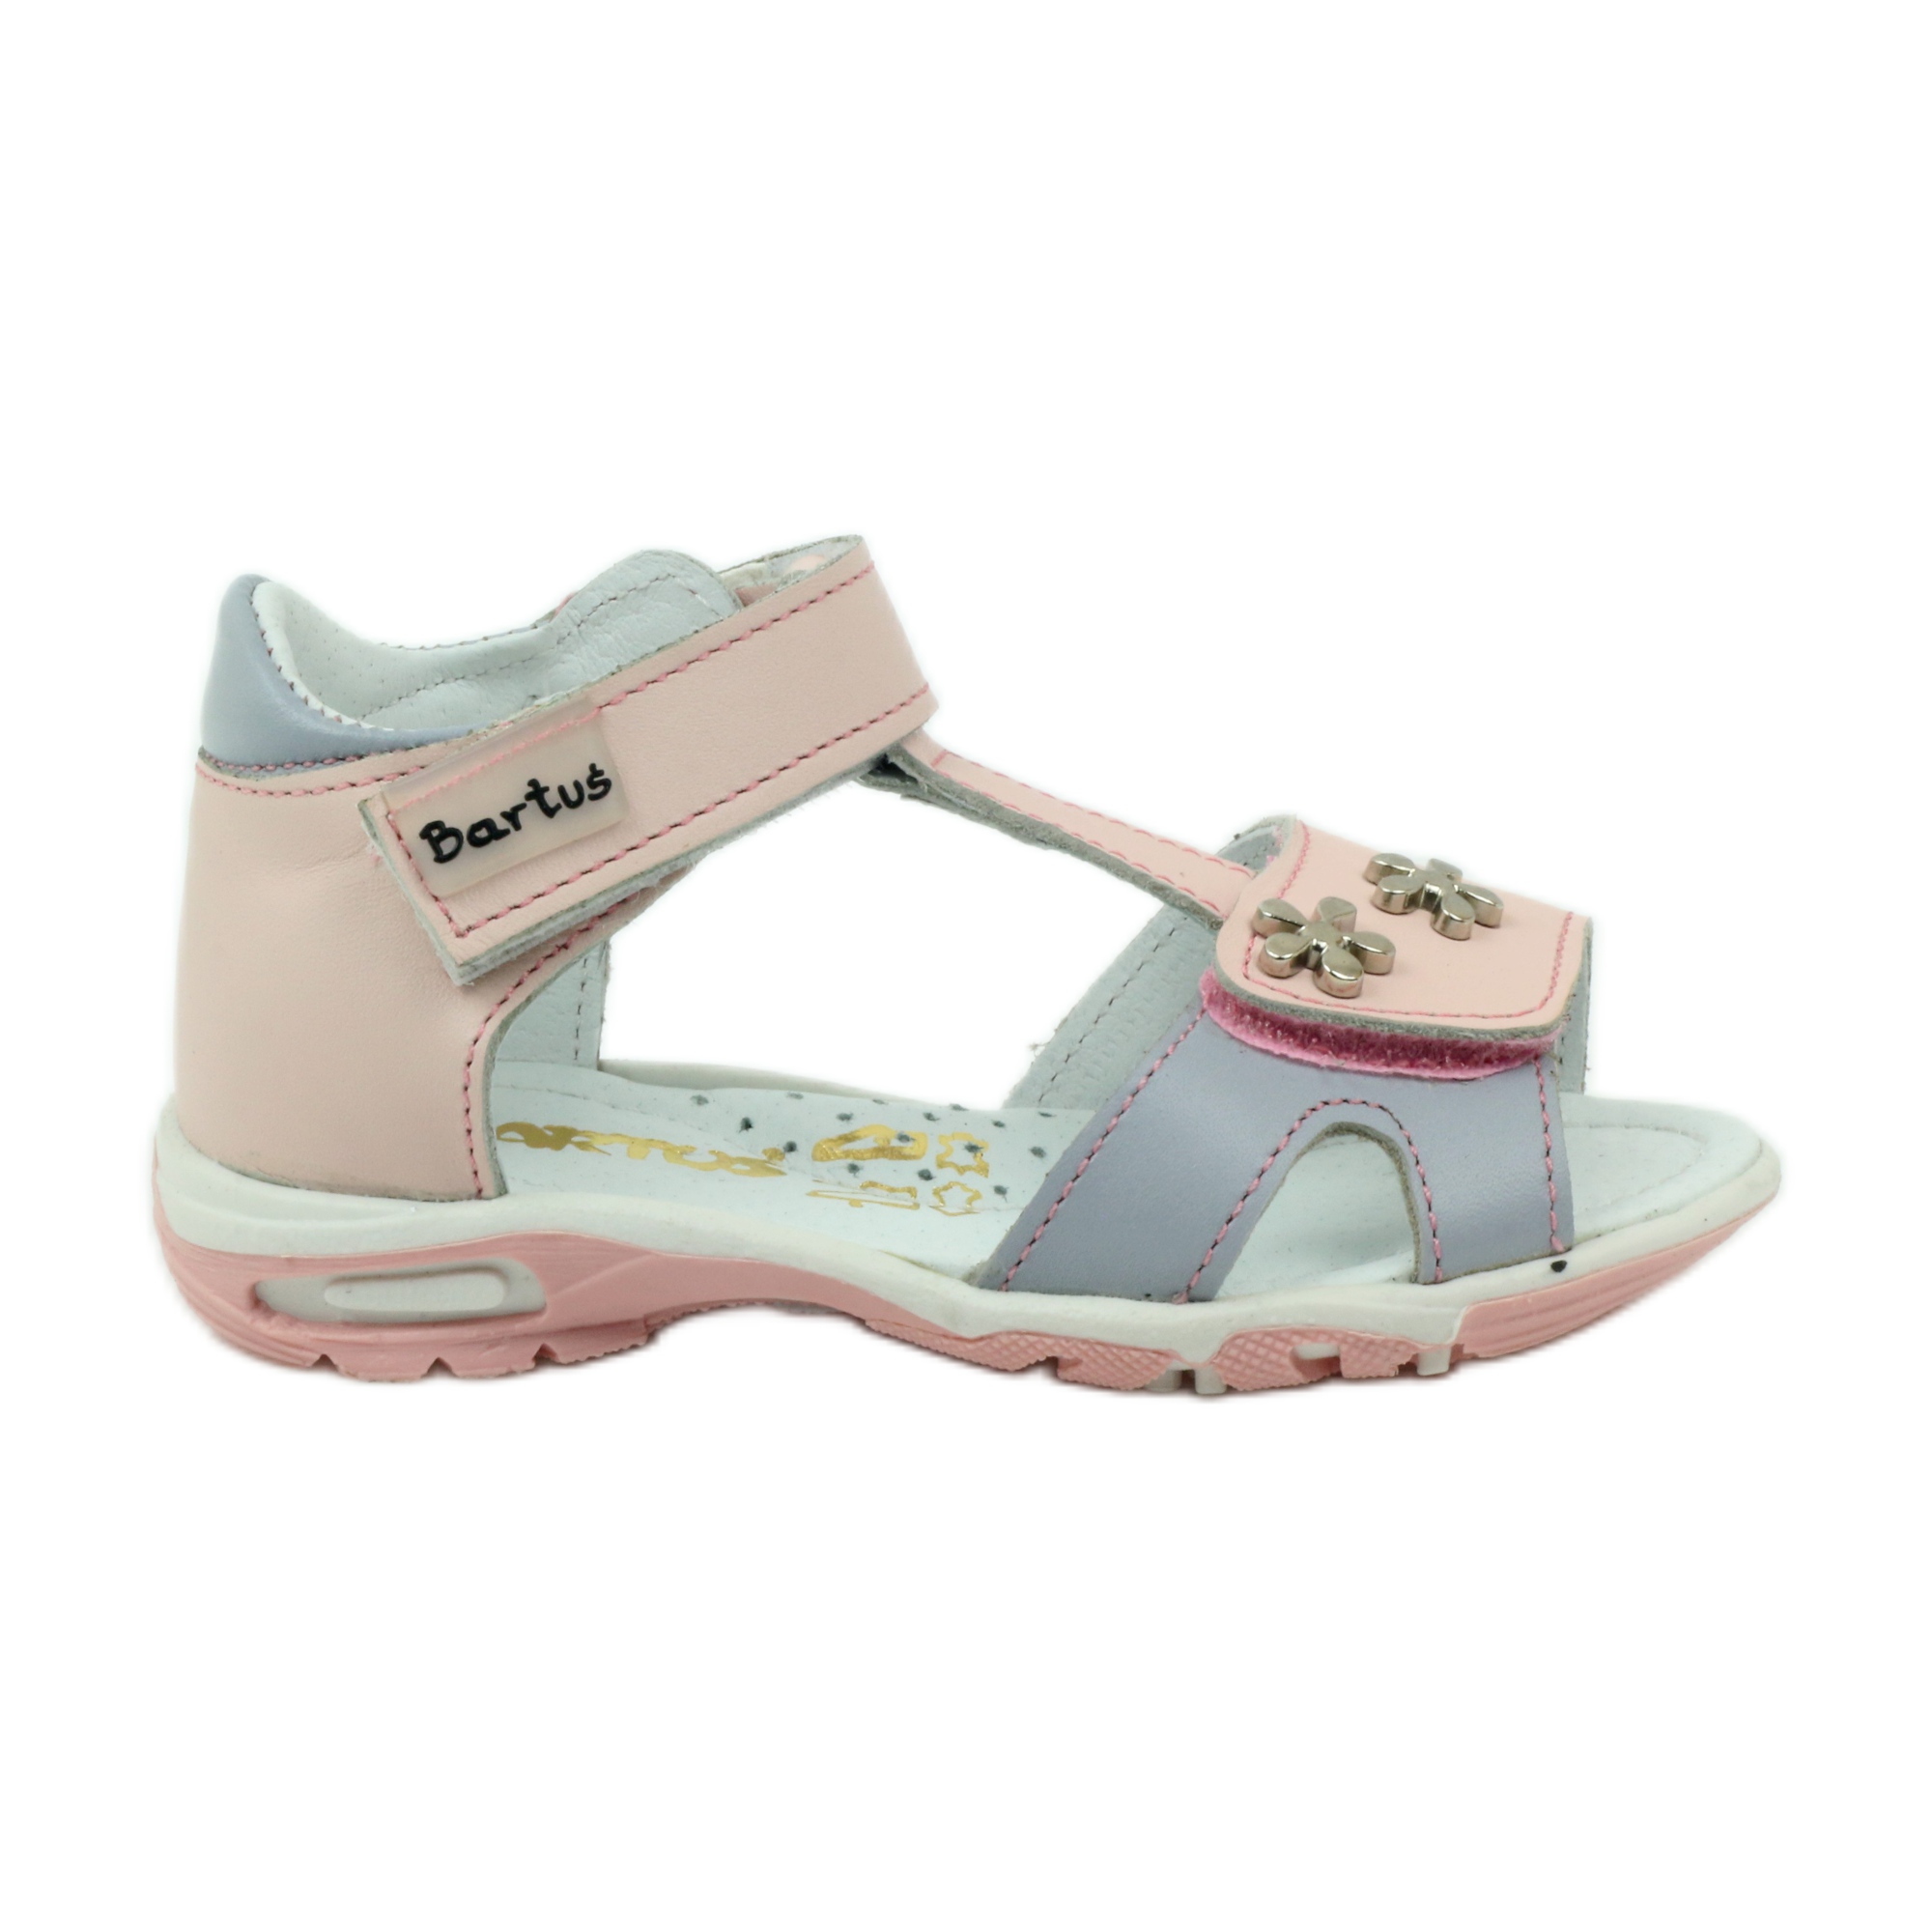 Velcro sandals Bartuś 138 pink grey - ButyModne.pl